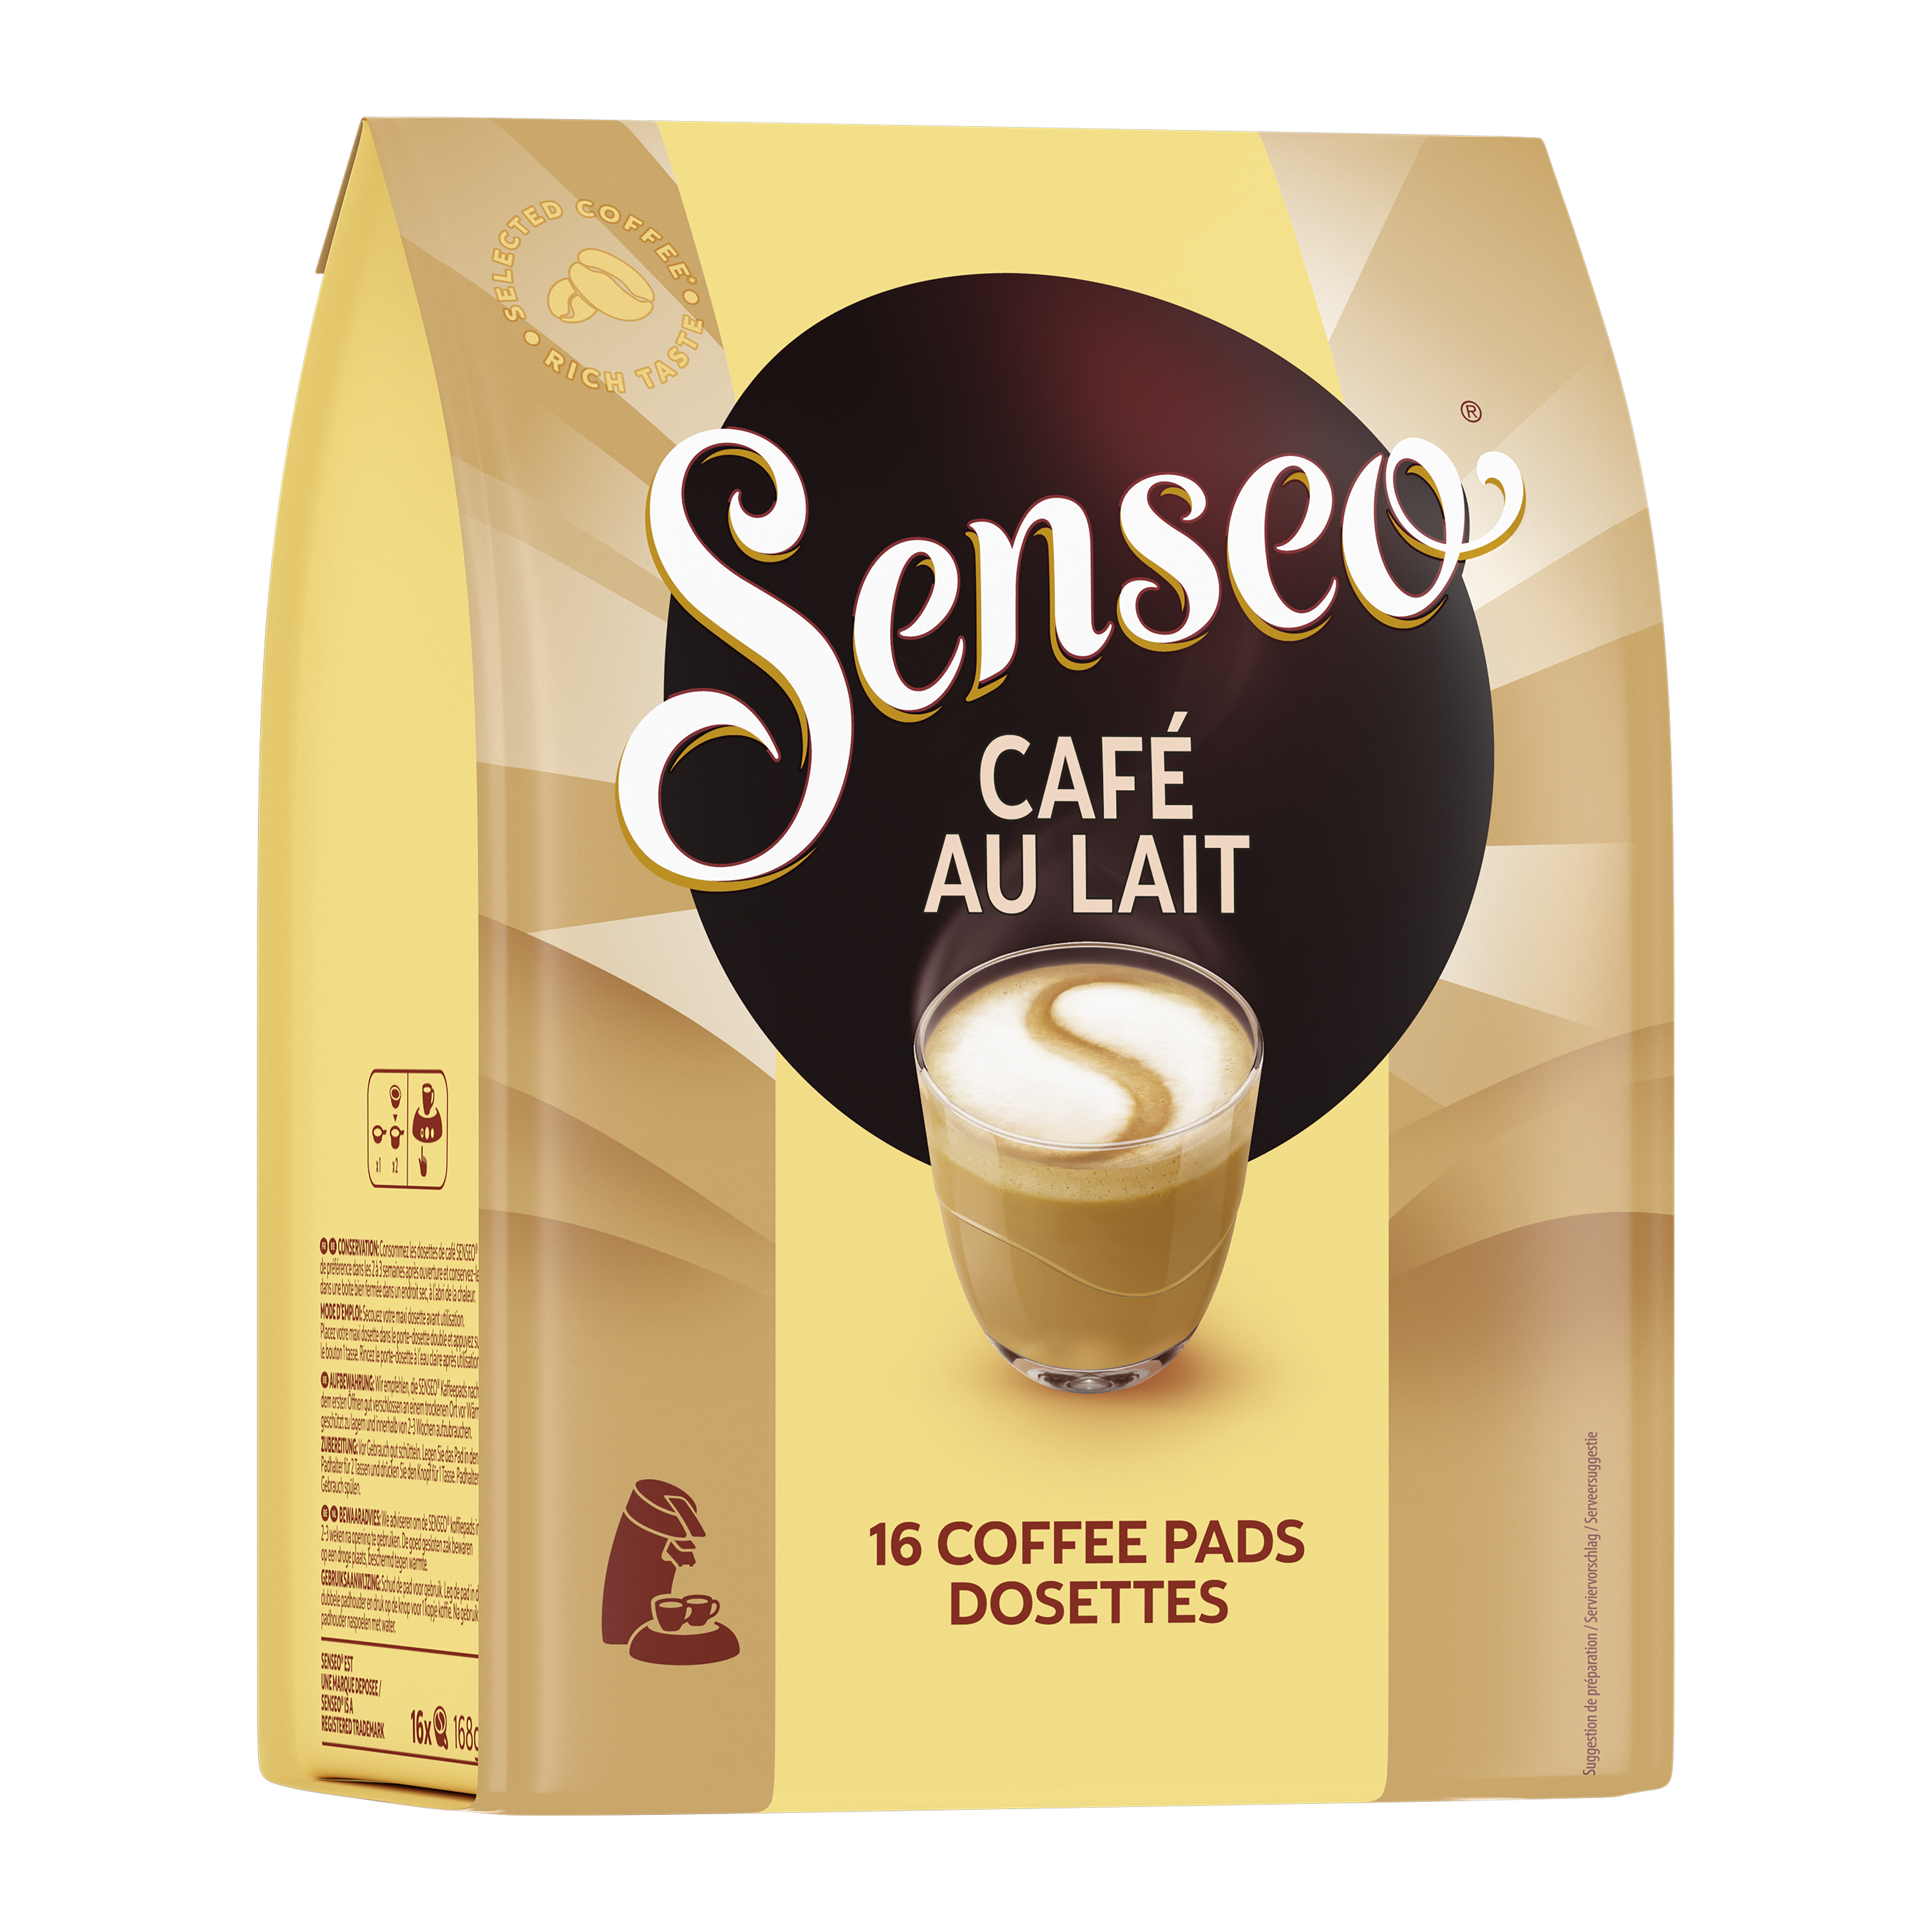 36 dosettes de café Senseo Espresso Classic - Café en dosette, en capsule